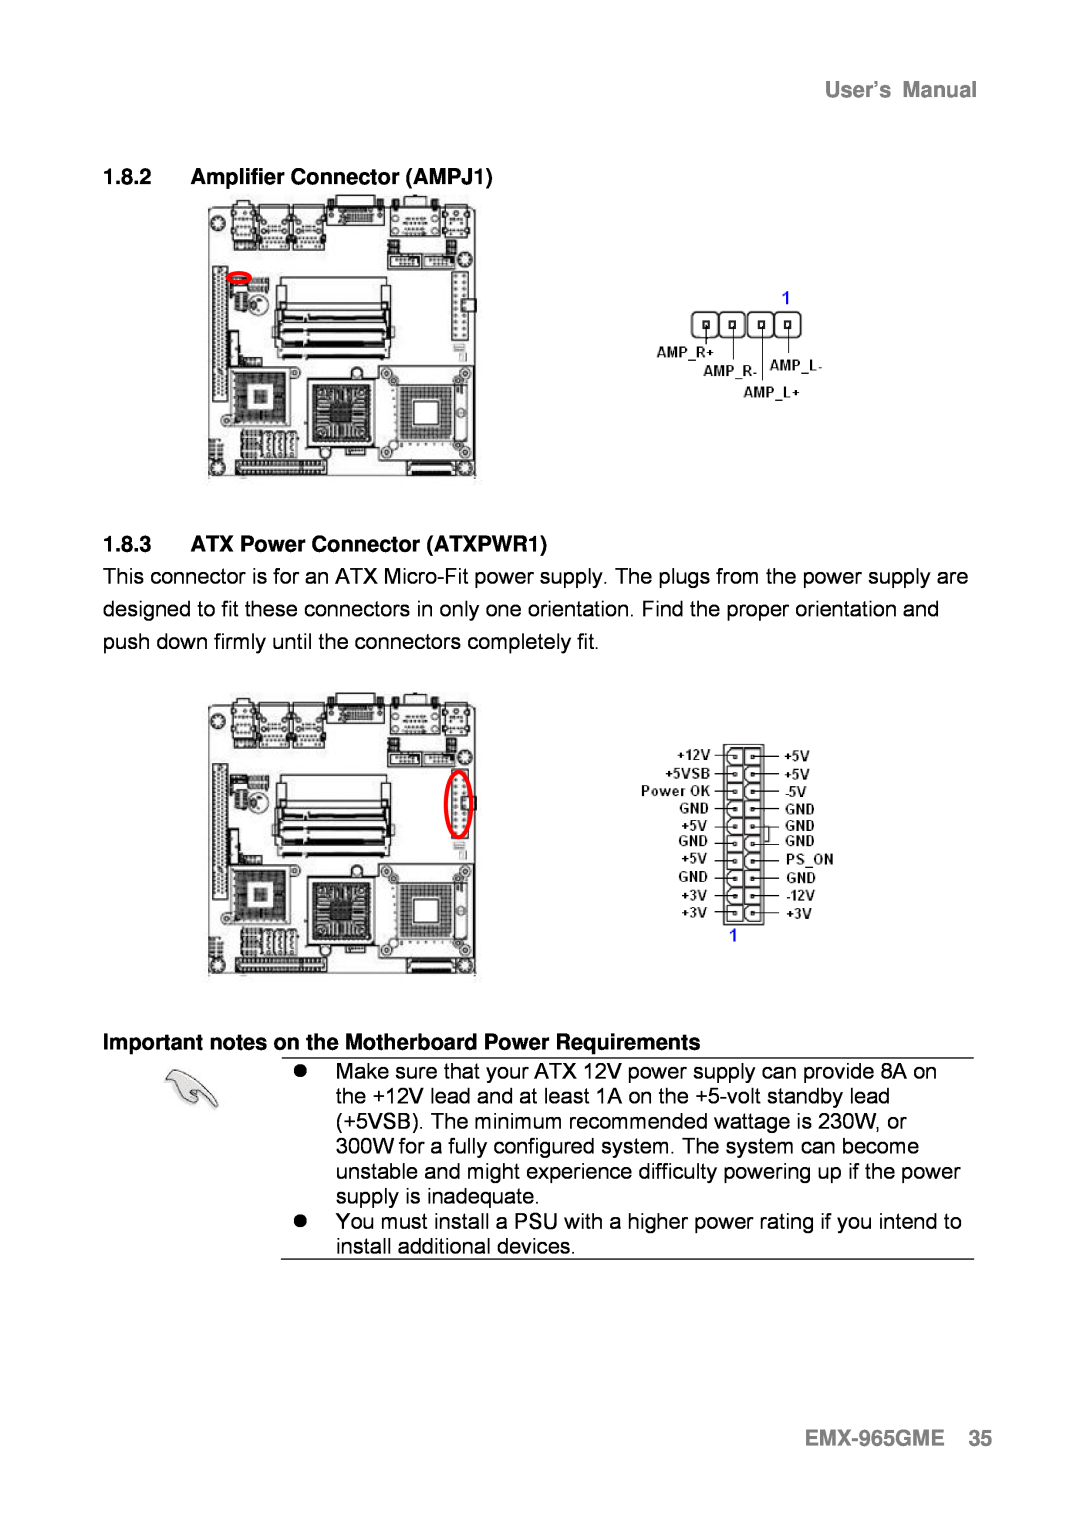 Intel user manual 1.8.2Amplifier Connector AMPJ1, 1.8.3ATX Power Connector ATXPWR1, EMX-965GME35, User’s Manual 